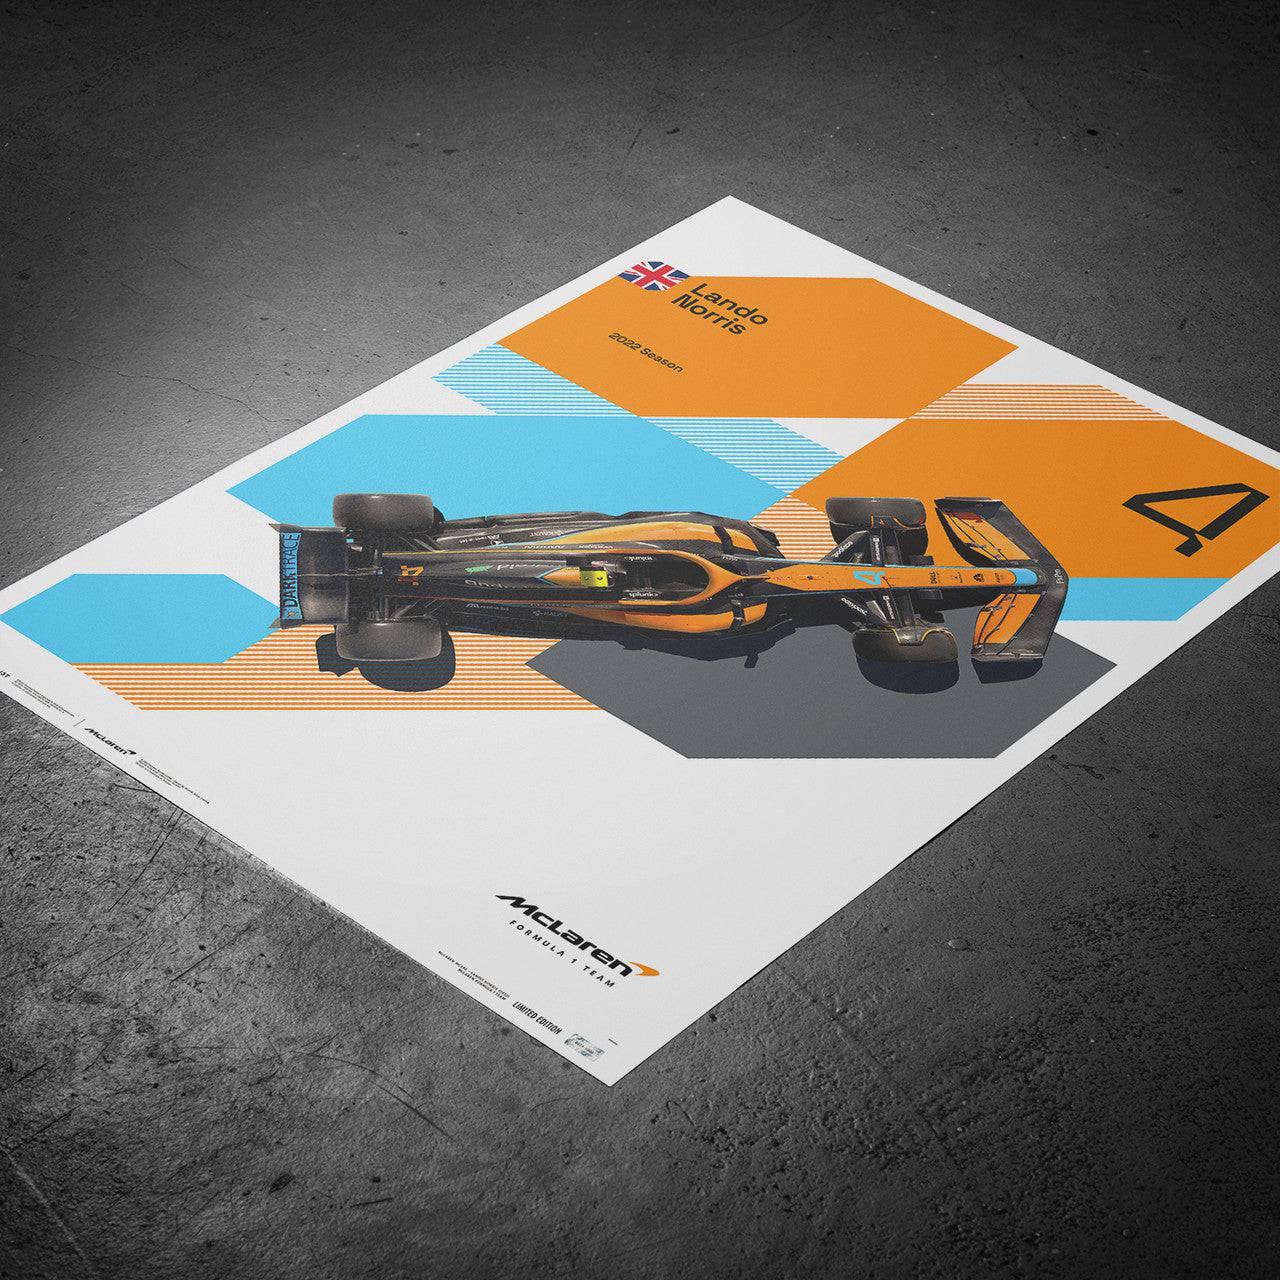 McLaren Formula 1 Team - Lando Norris - 2022 | Limited Edition